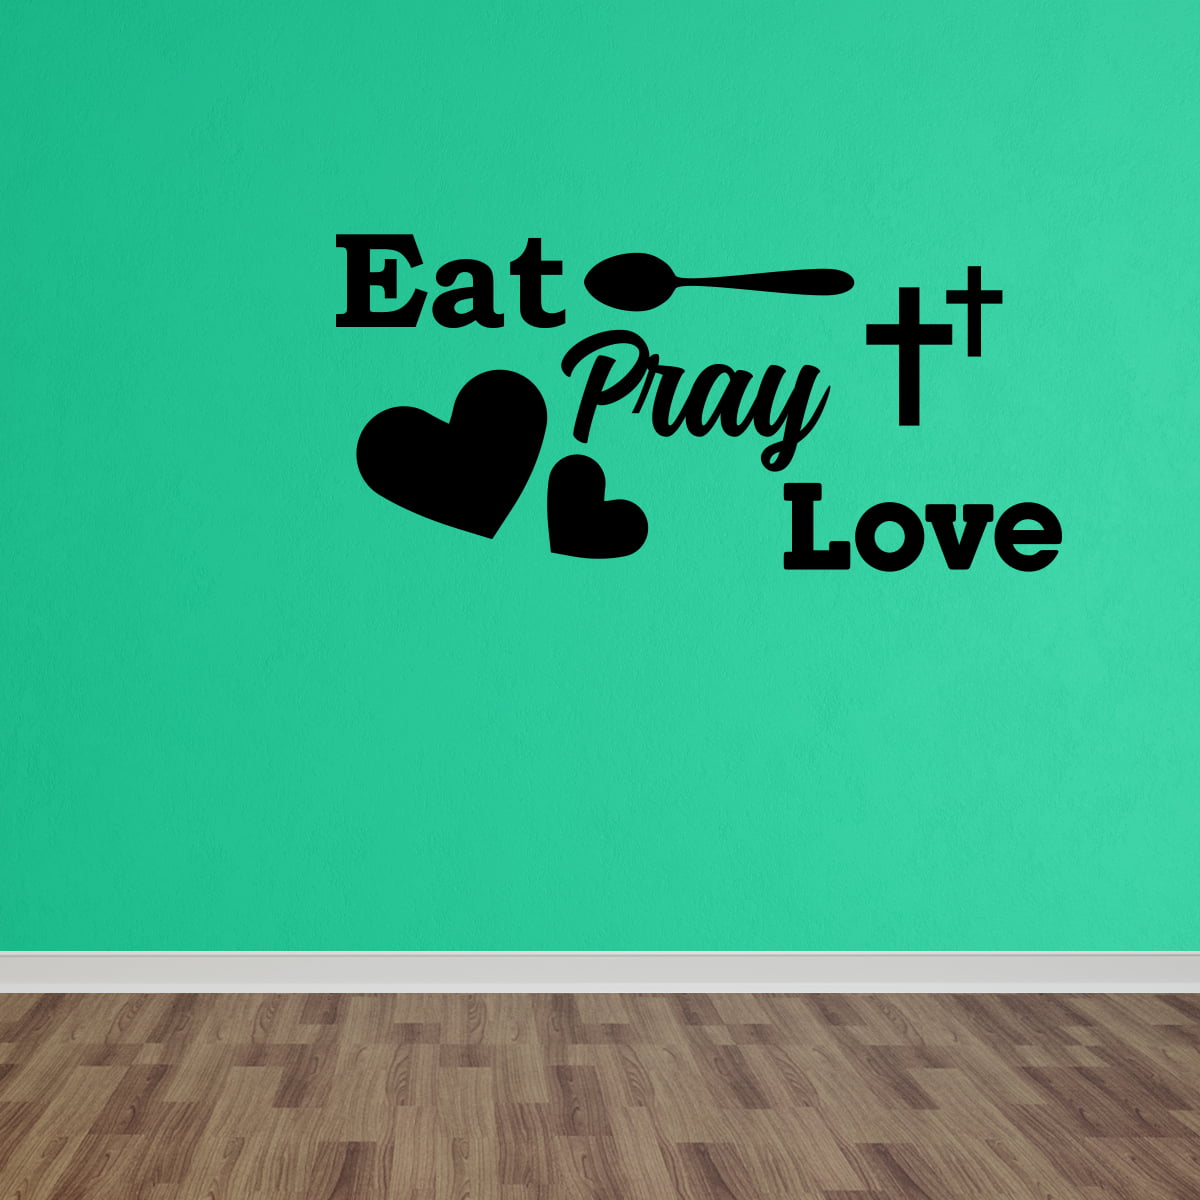 eat pray love for free